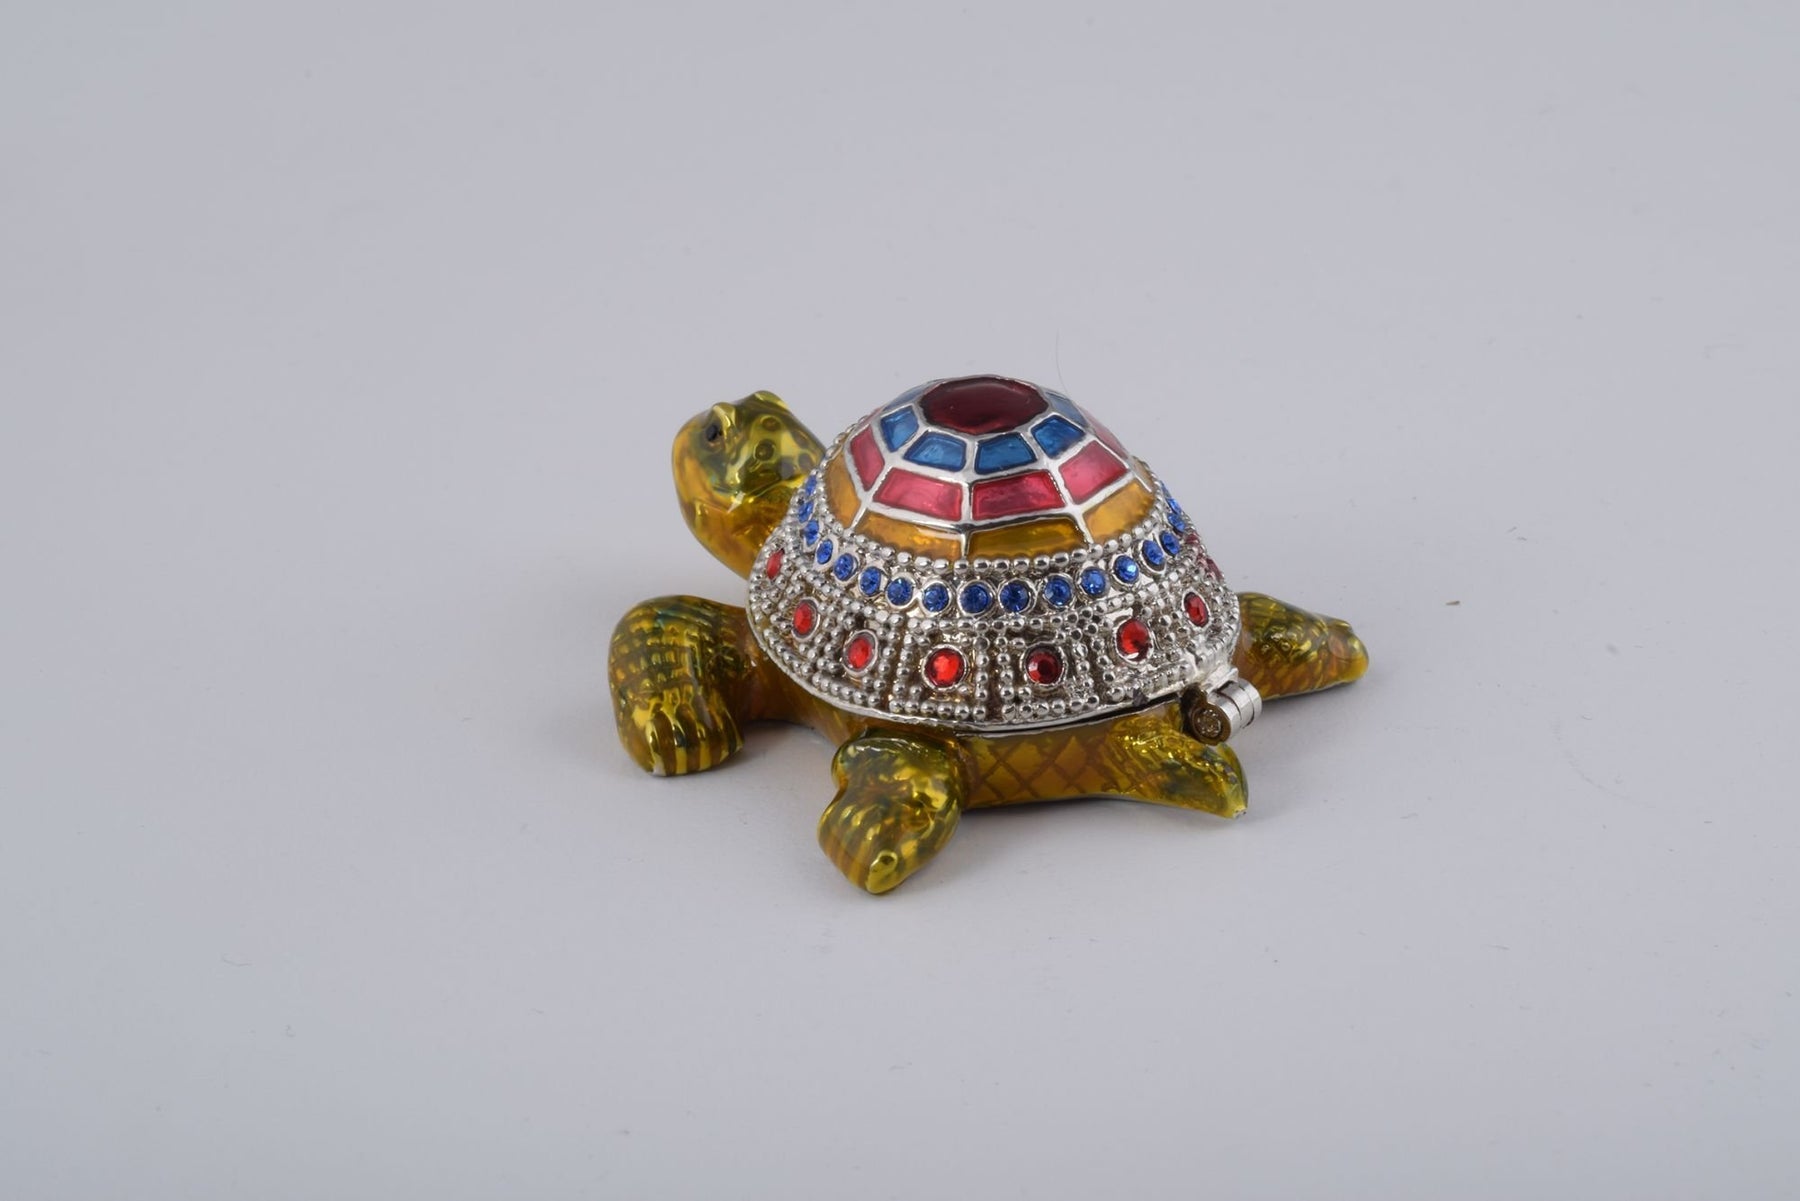 Keren Kopal Colorful Shell Turtle  40.25